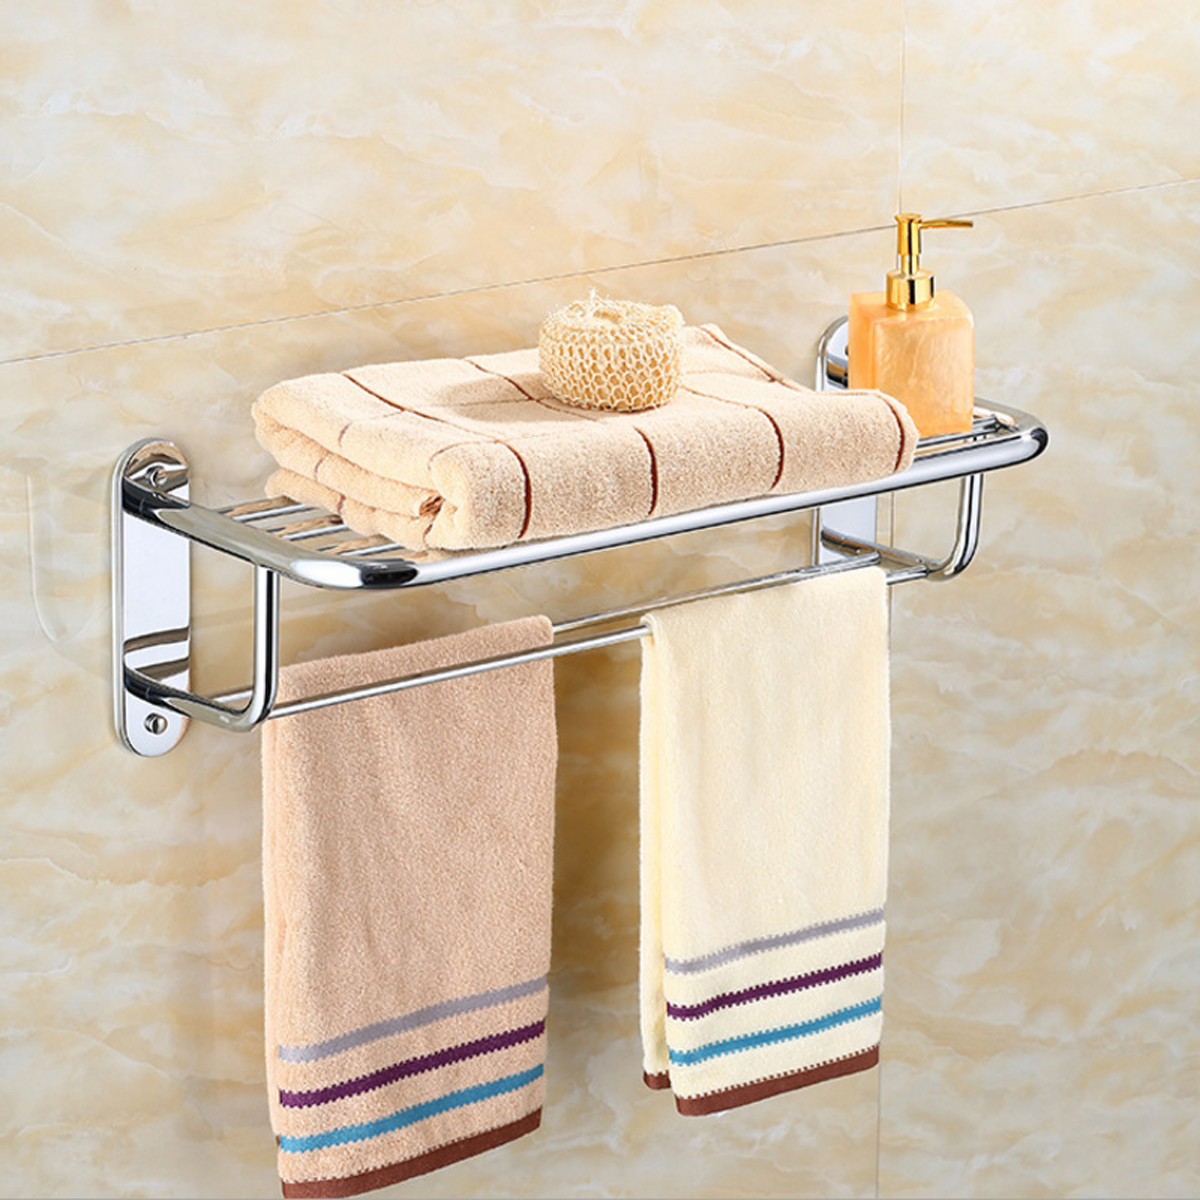 Bathroom Wall Towel Rack
 Chrome Stylish Bathroom Wall Mounted Towel Rail Holder